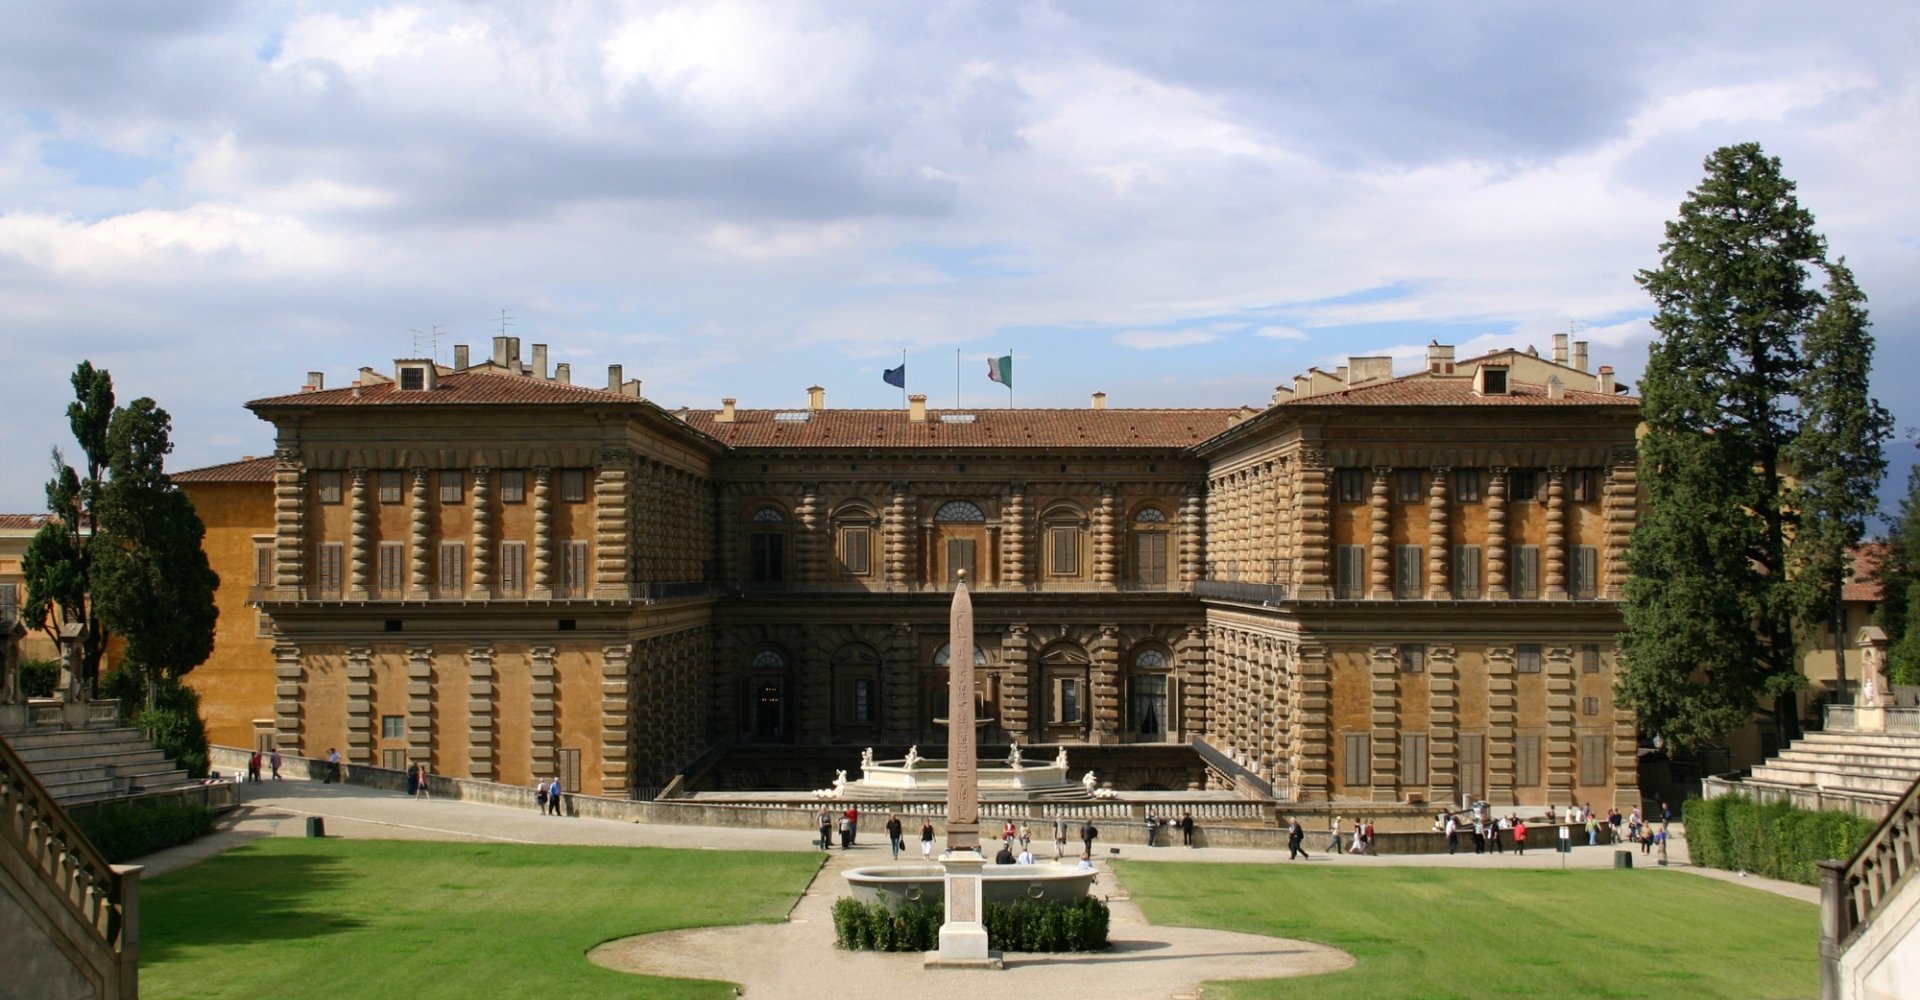 Palazzo Pitti seen from the Boboli Gardens